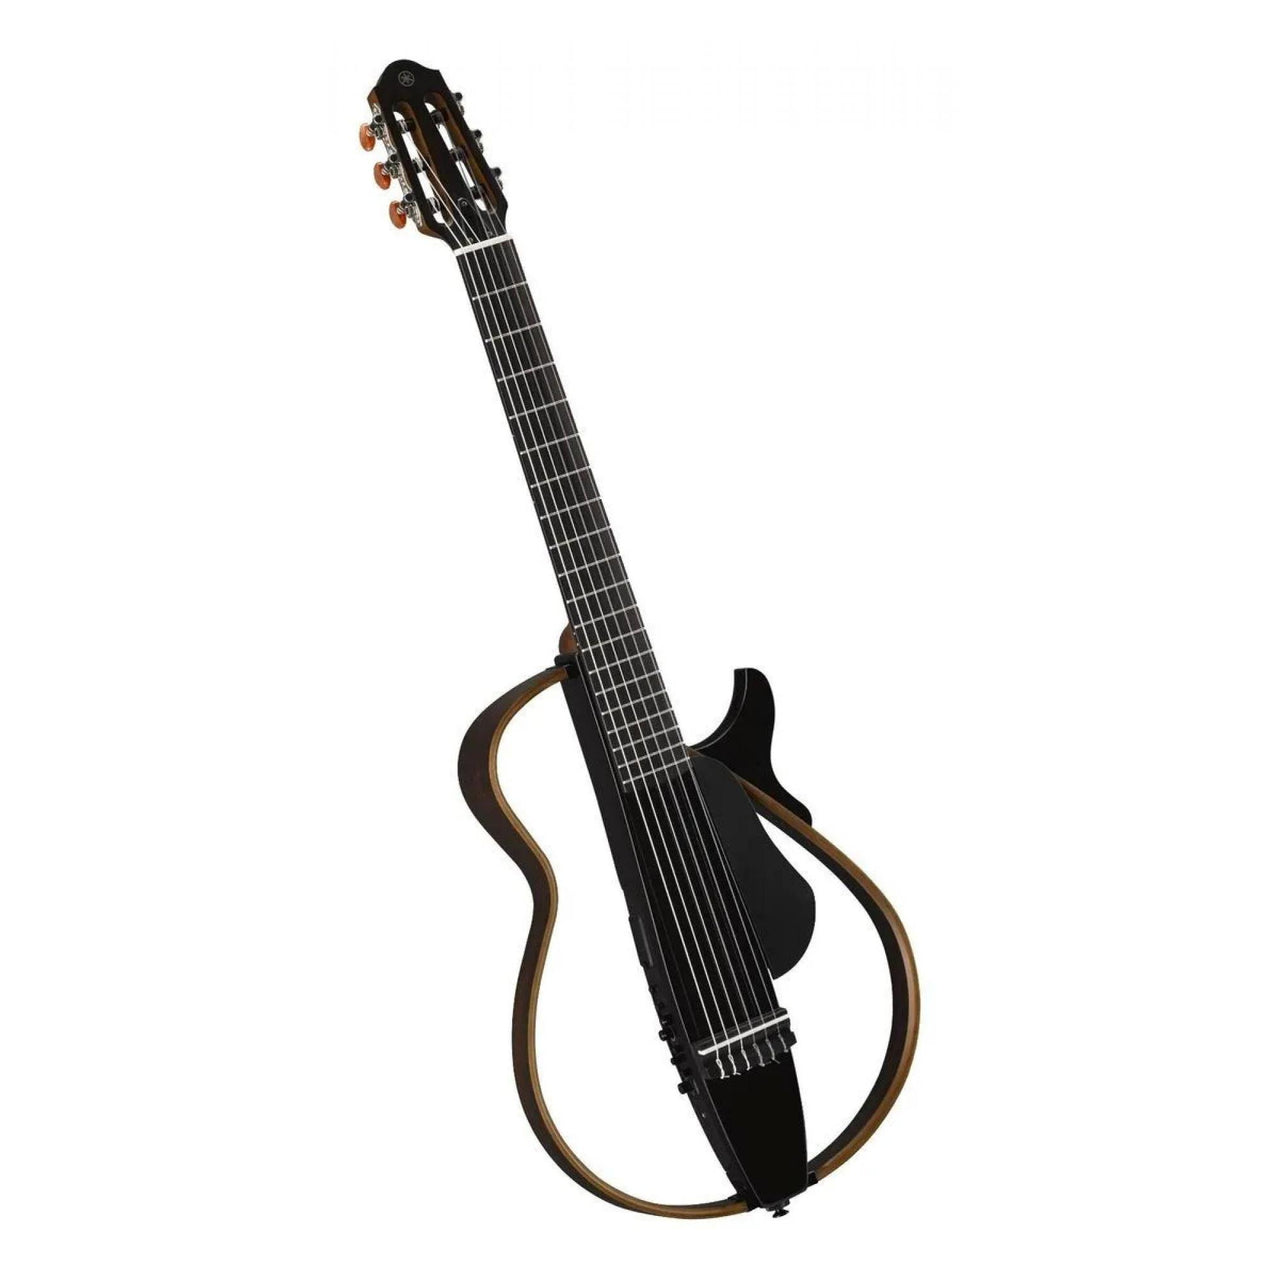 Guitarra Yamaha Silent Cuerdas De Nylon Translucent Black, Slg200ntbl